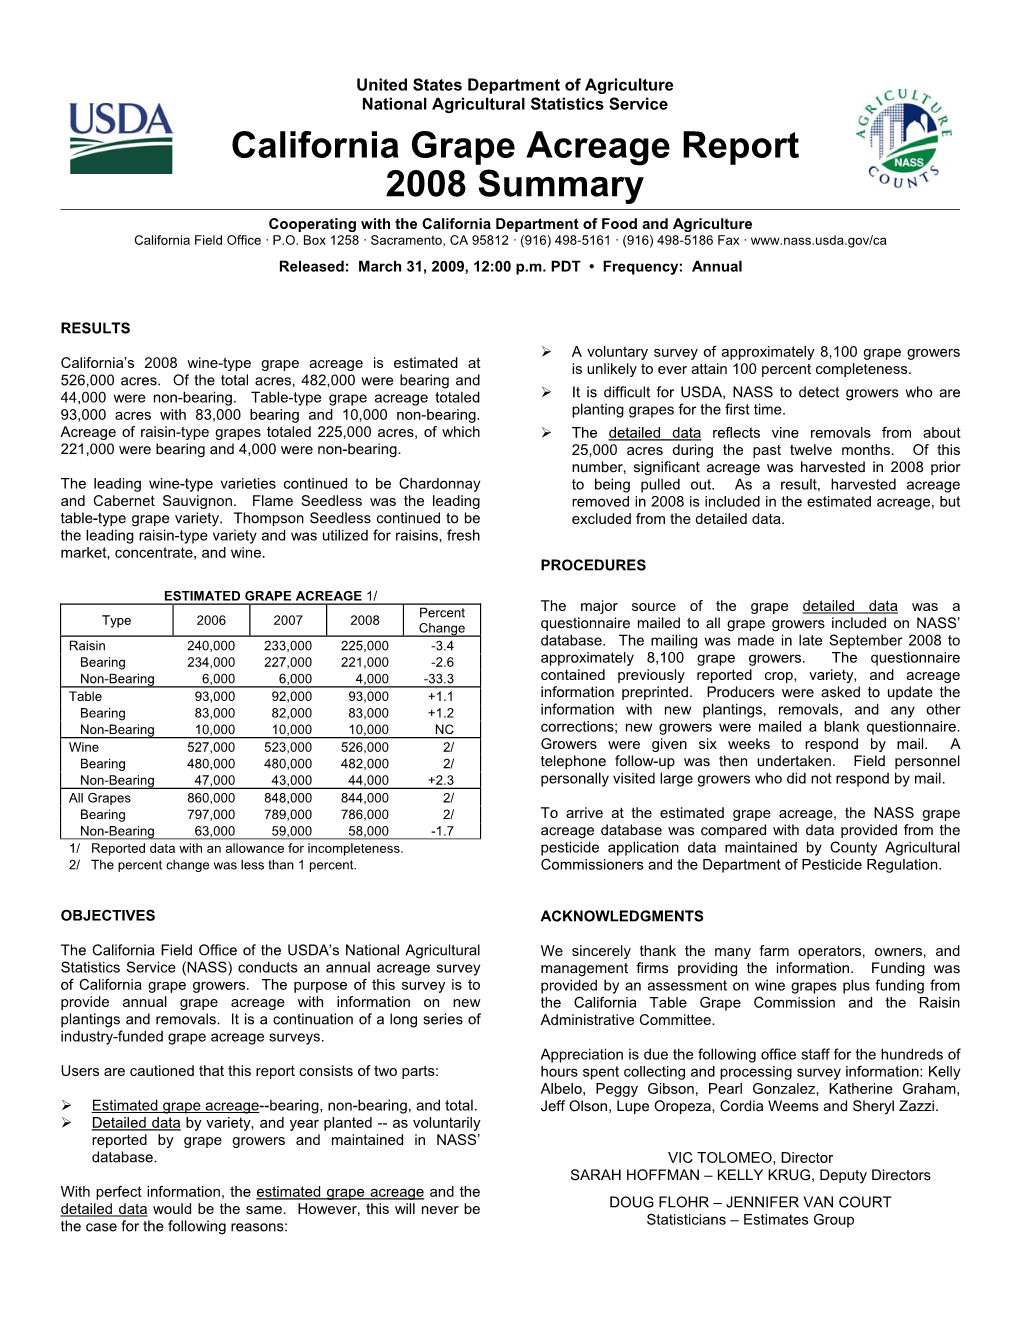 California Grape Acreage Report 2008 Summary